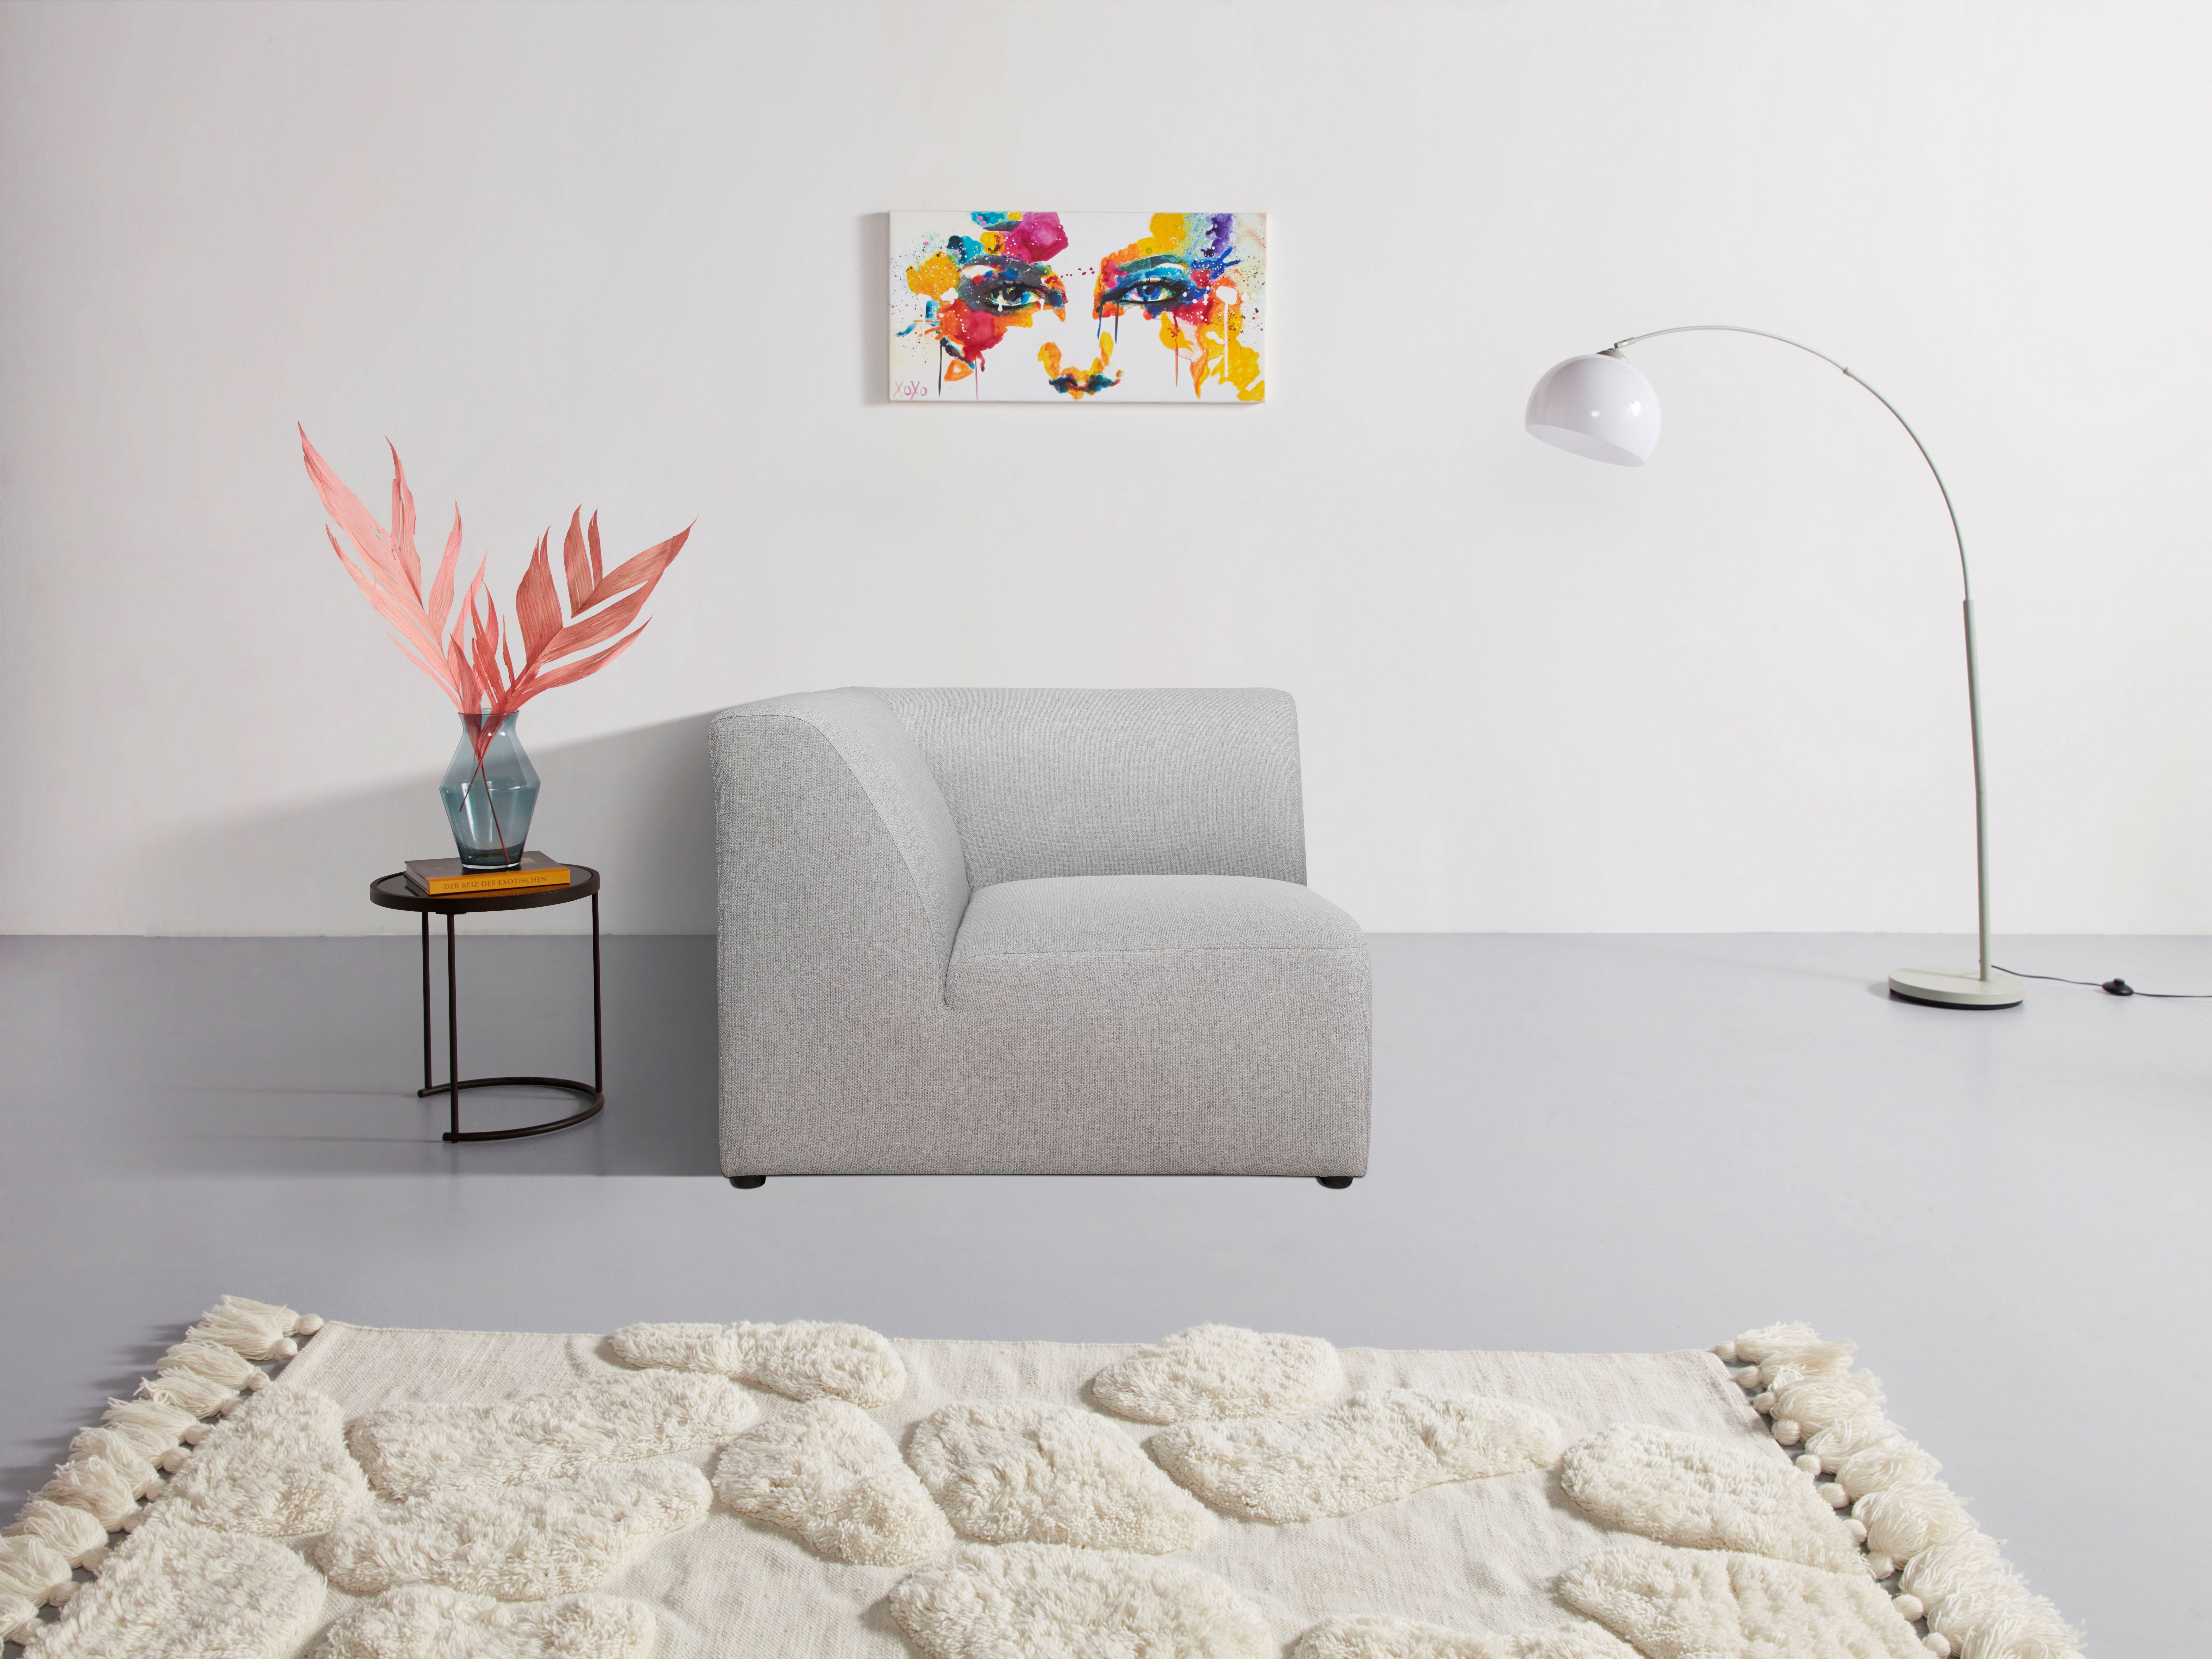 INOSIGN Sofa-Eckelement Koa, angenehmer Komfort, schöne Proportionen beige